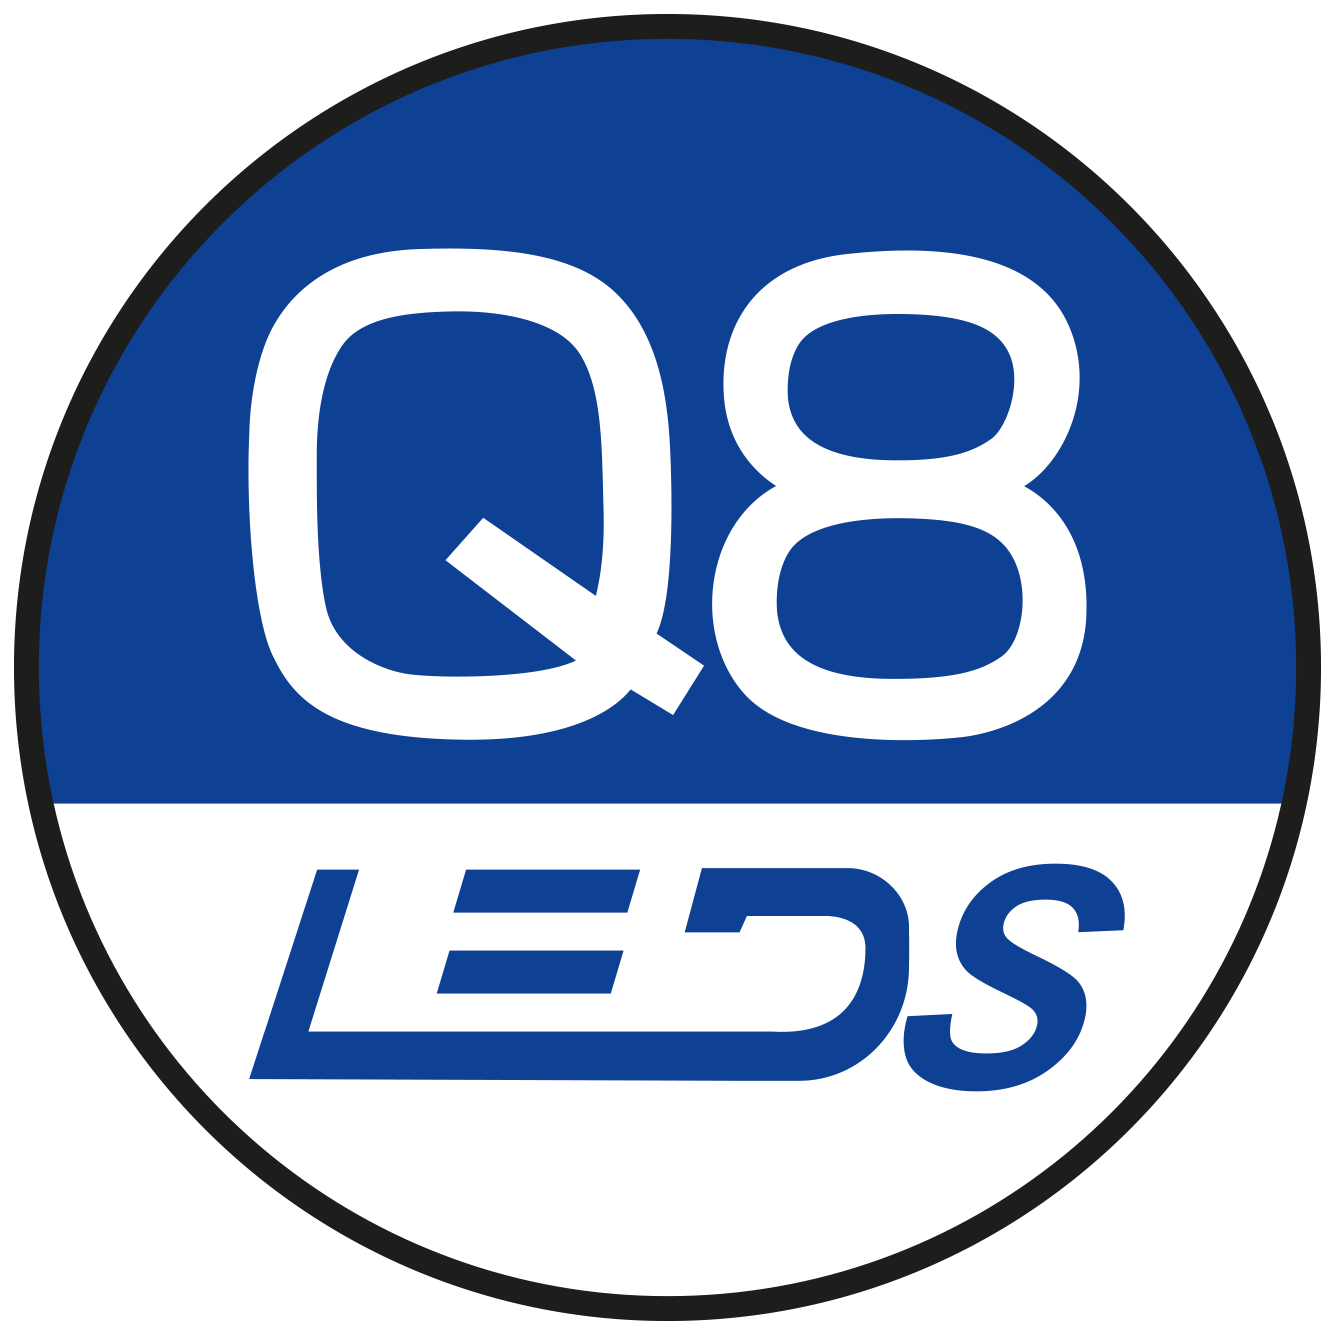 Q8LEDs كويت ليدز